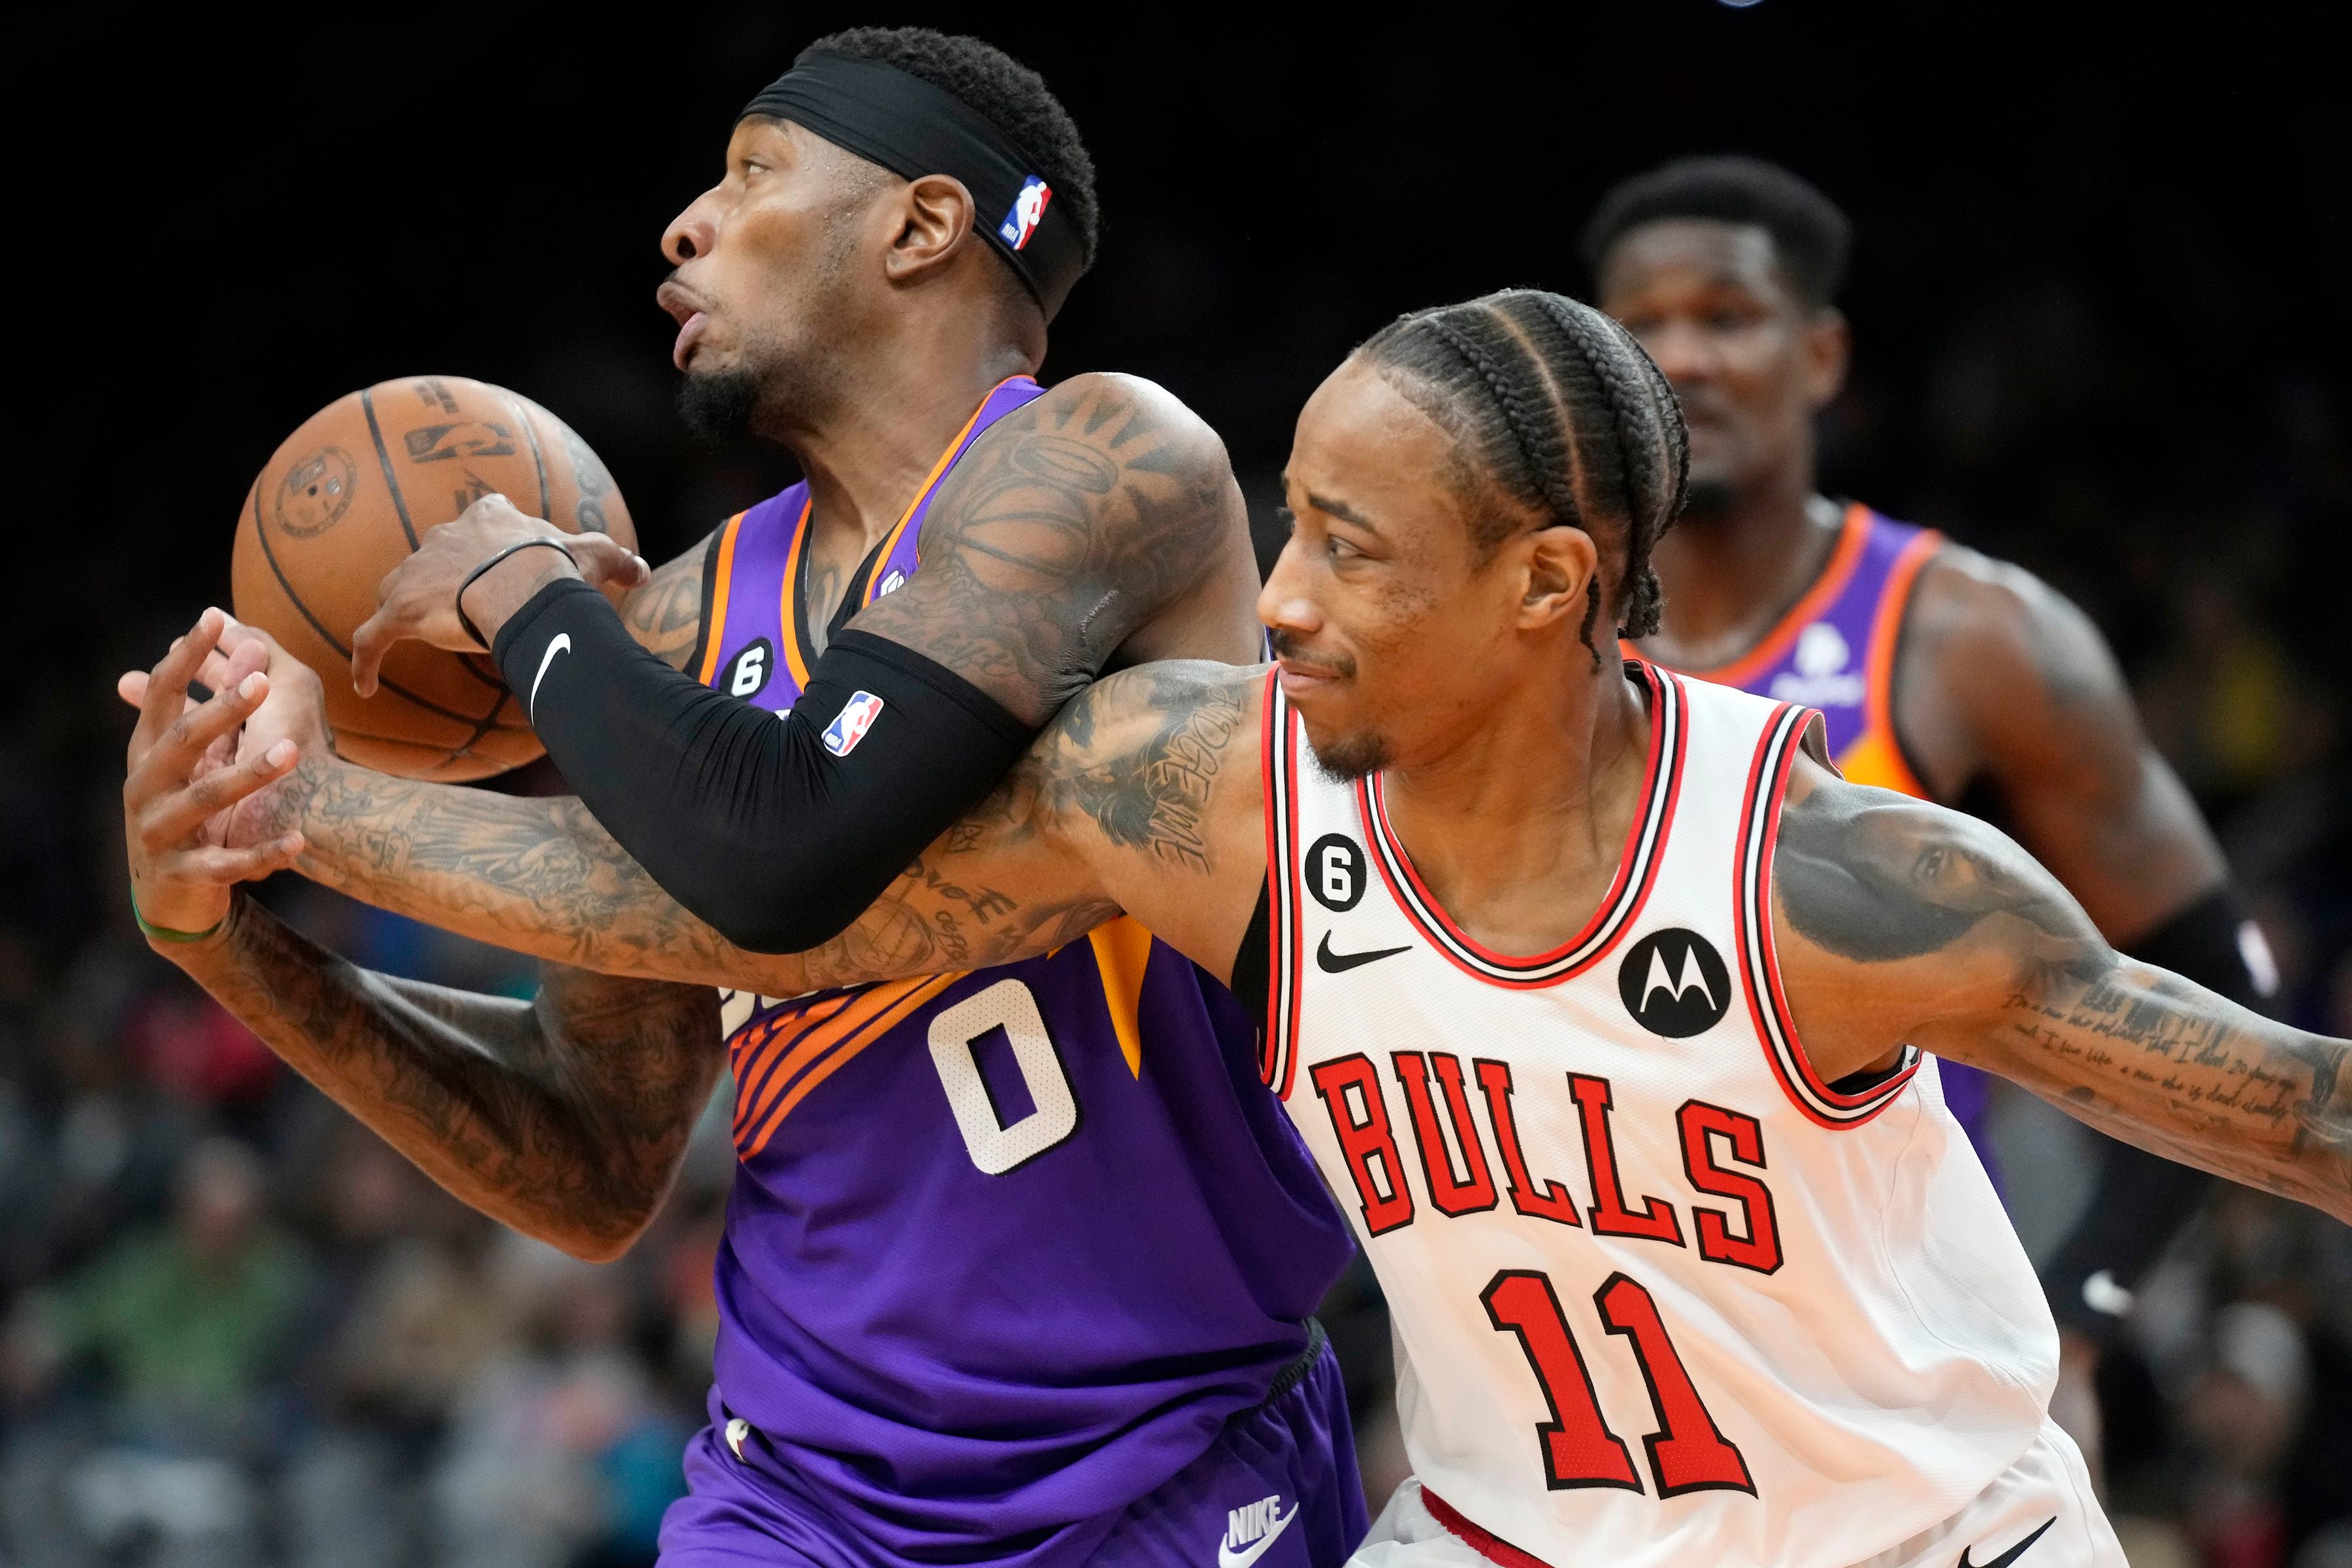 Devin Booker scores 51 points in 3 quarters, Suns rout Bulls